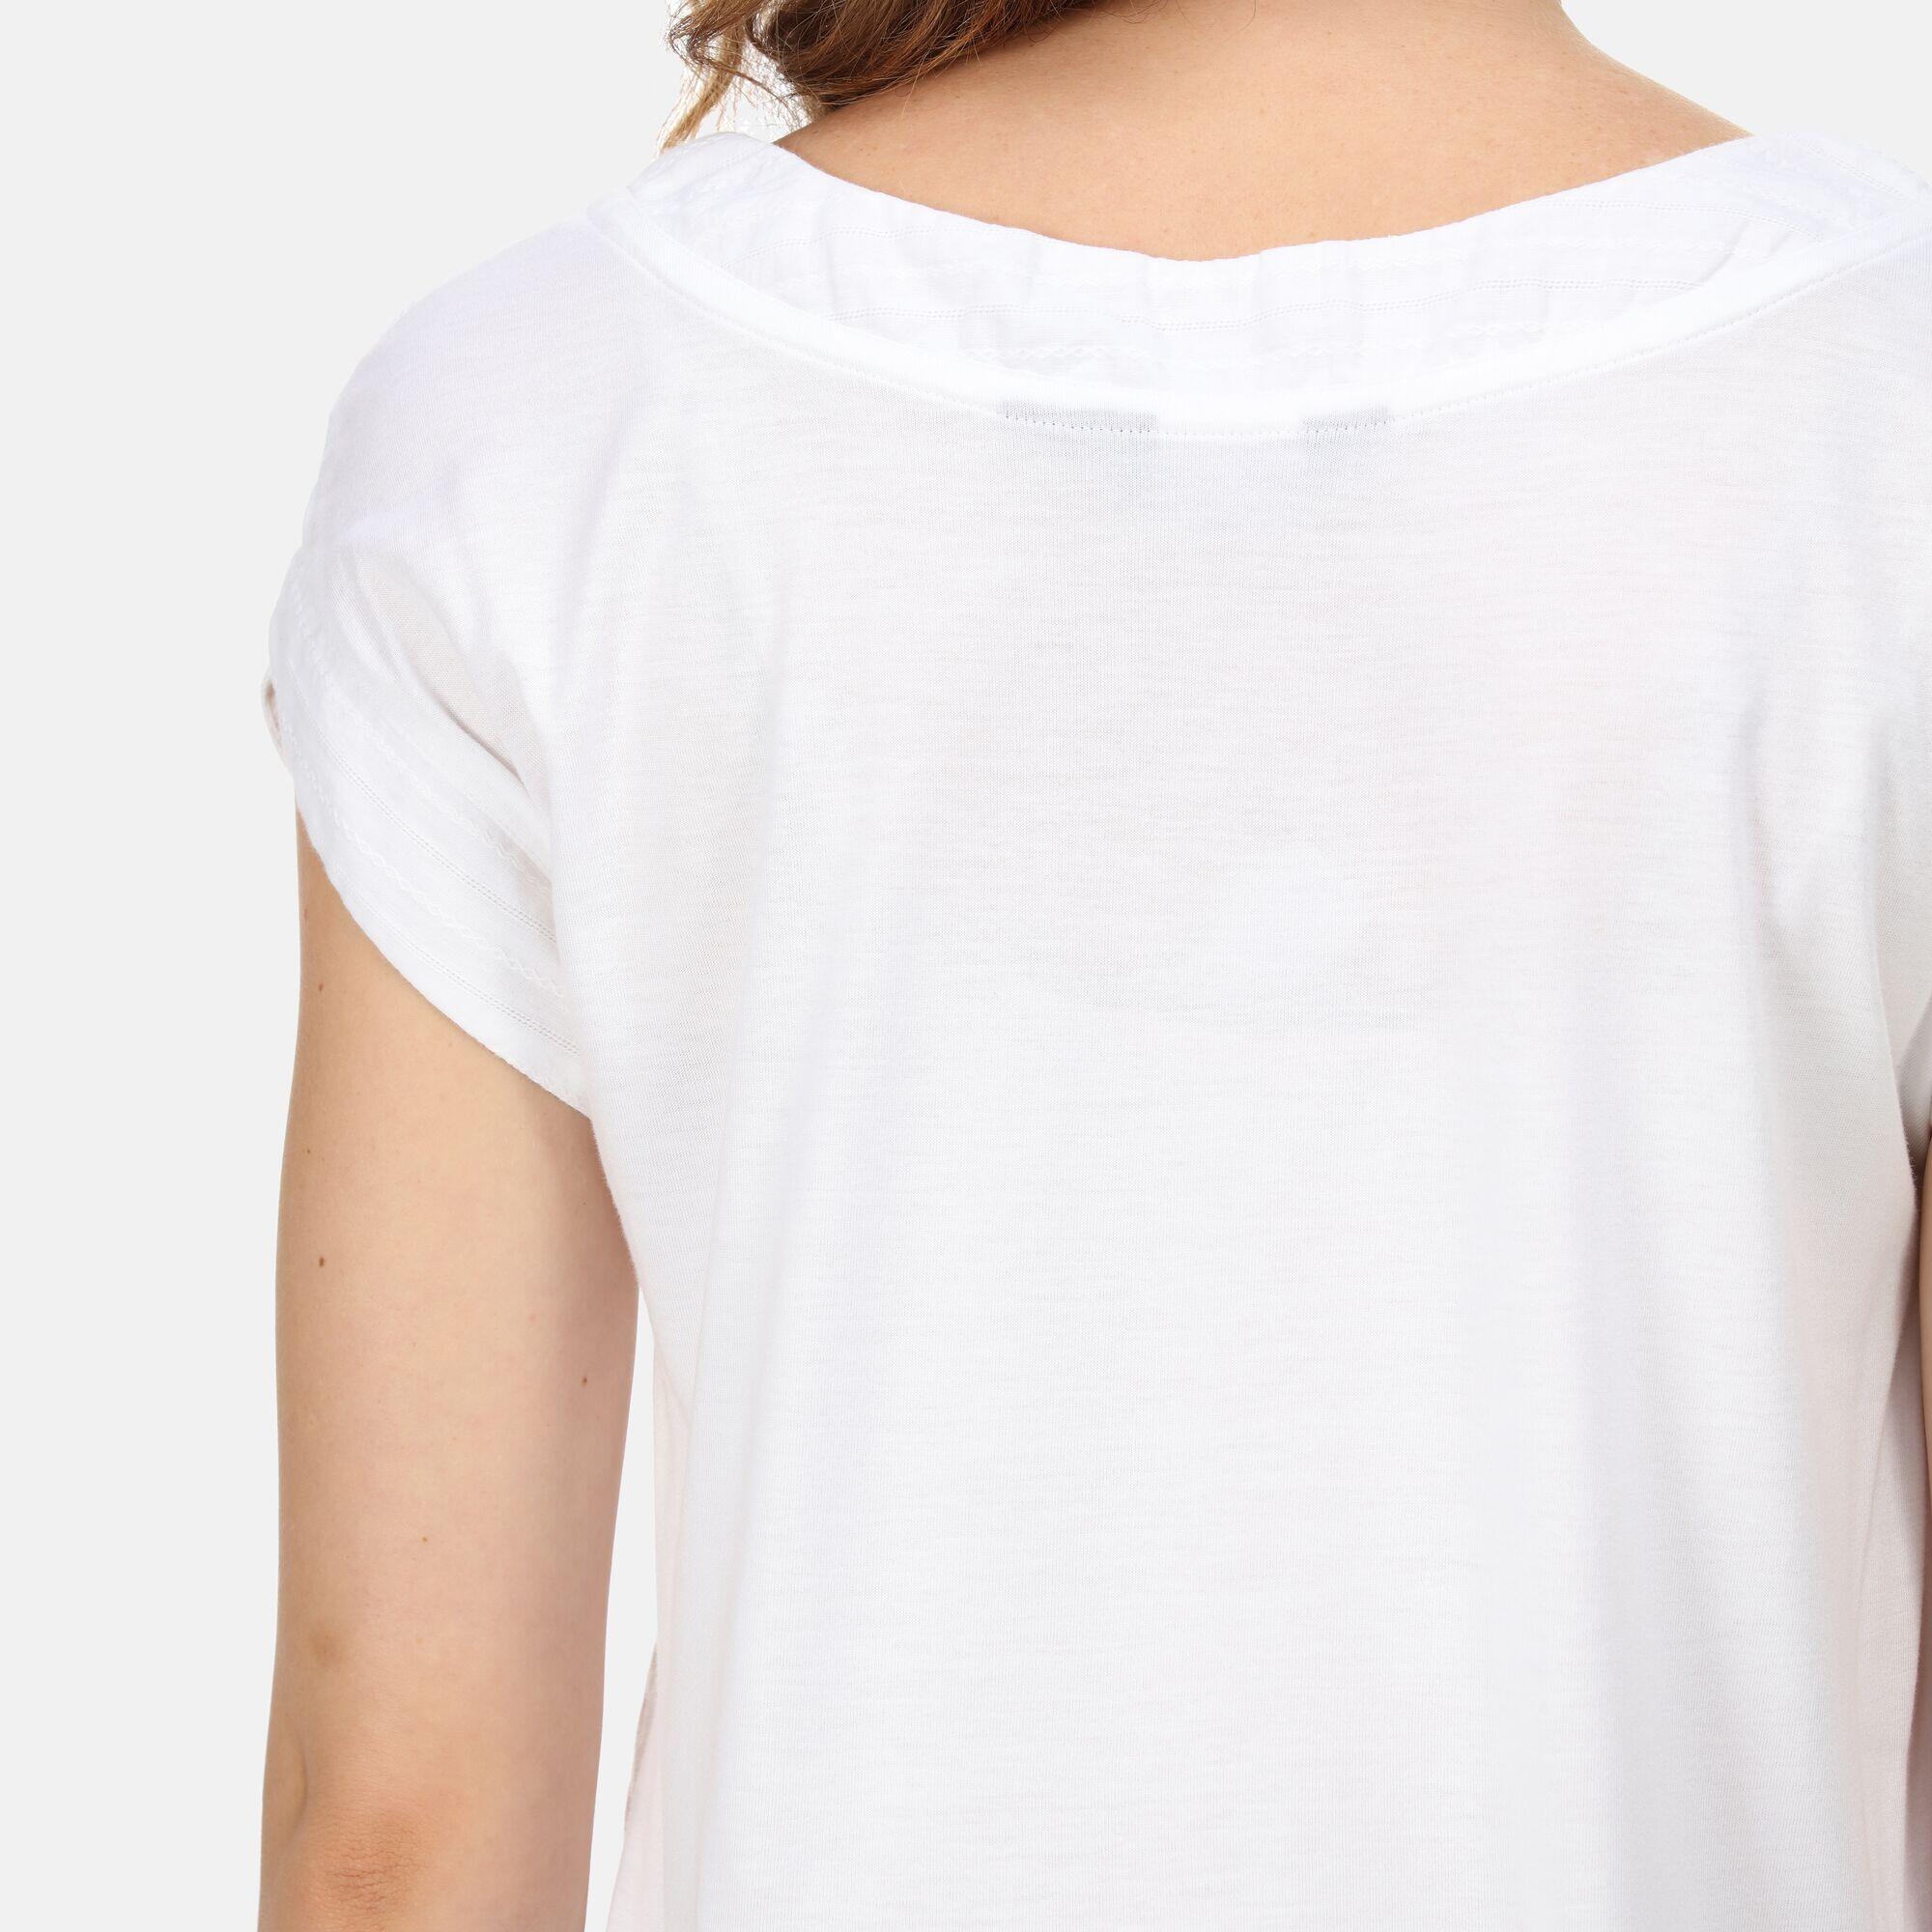 Adine Women's Walking Short Sleeve T-Shirt - White 5/5